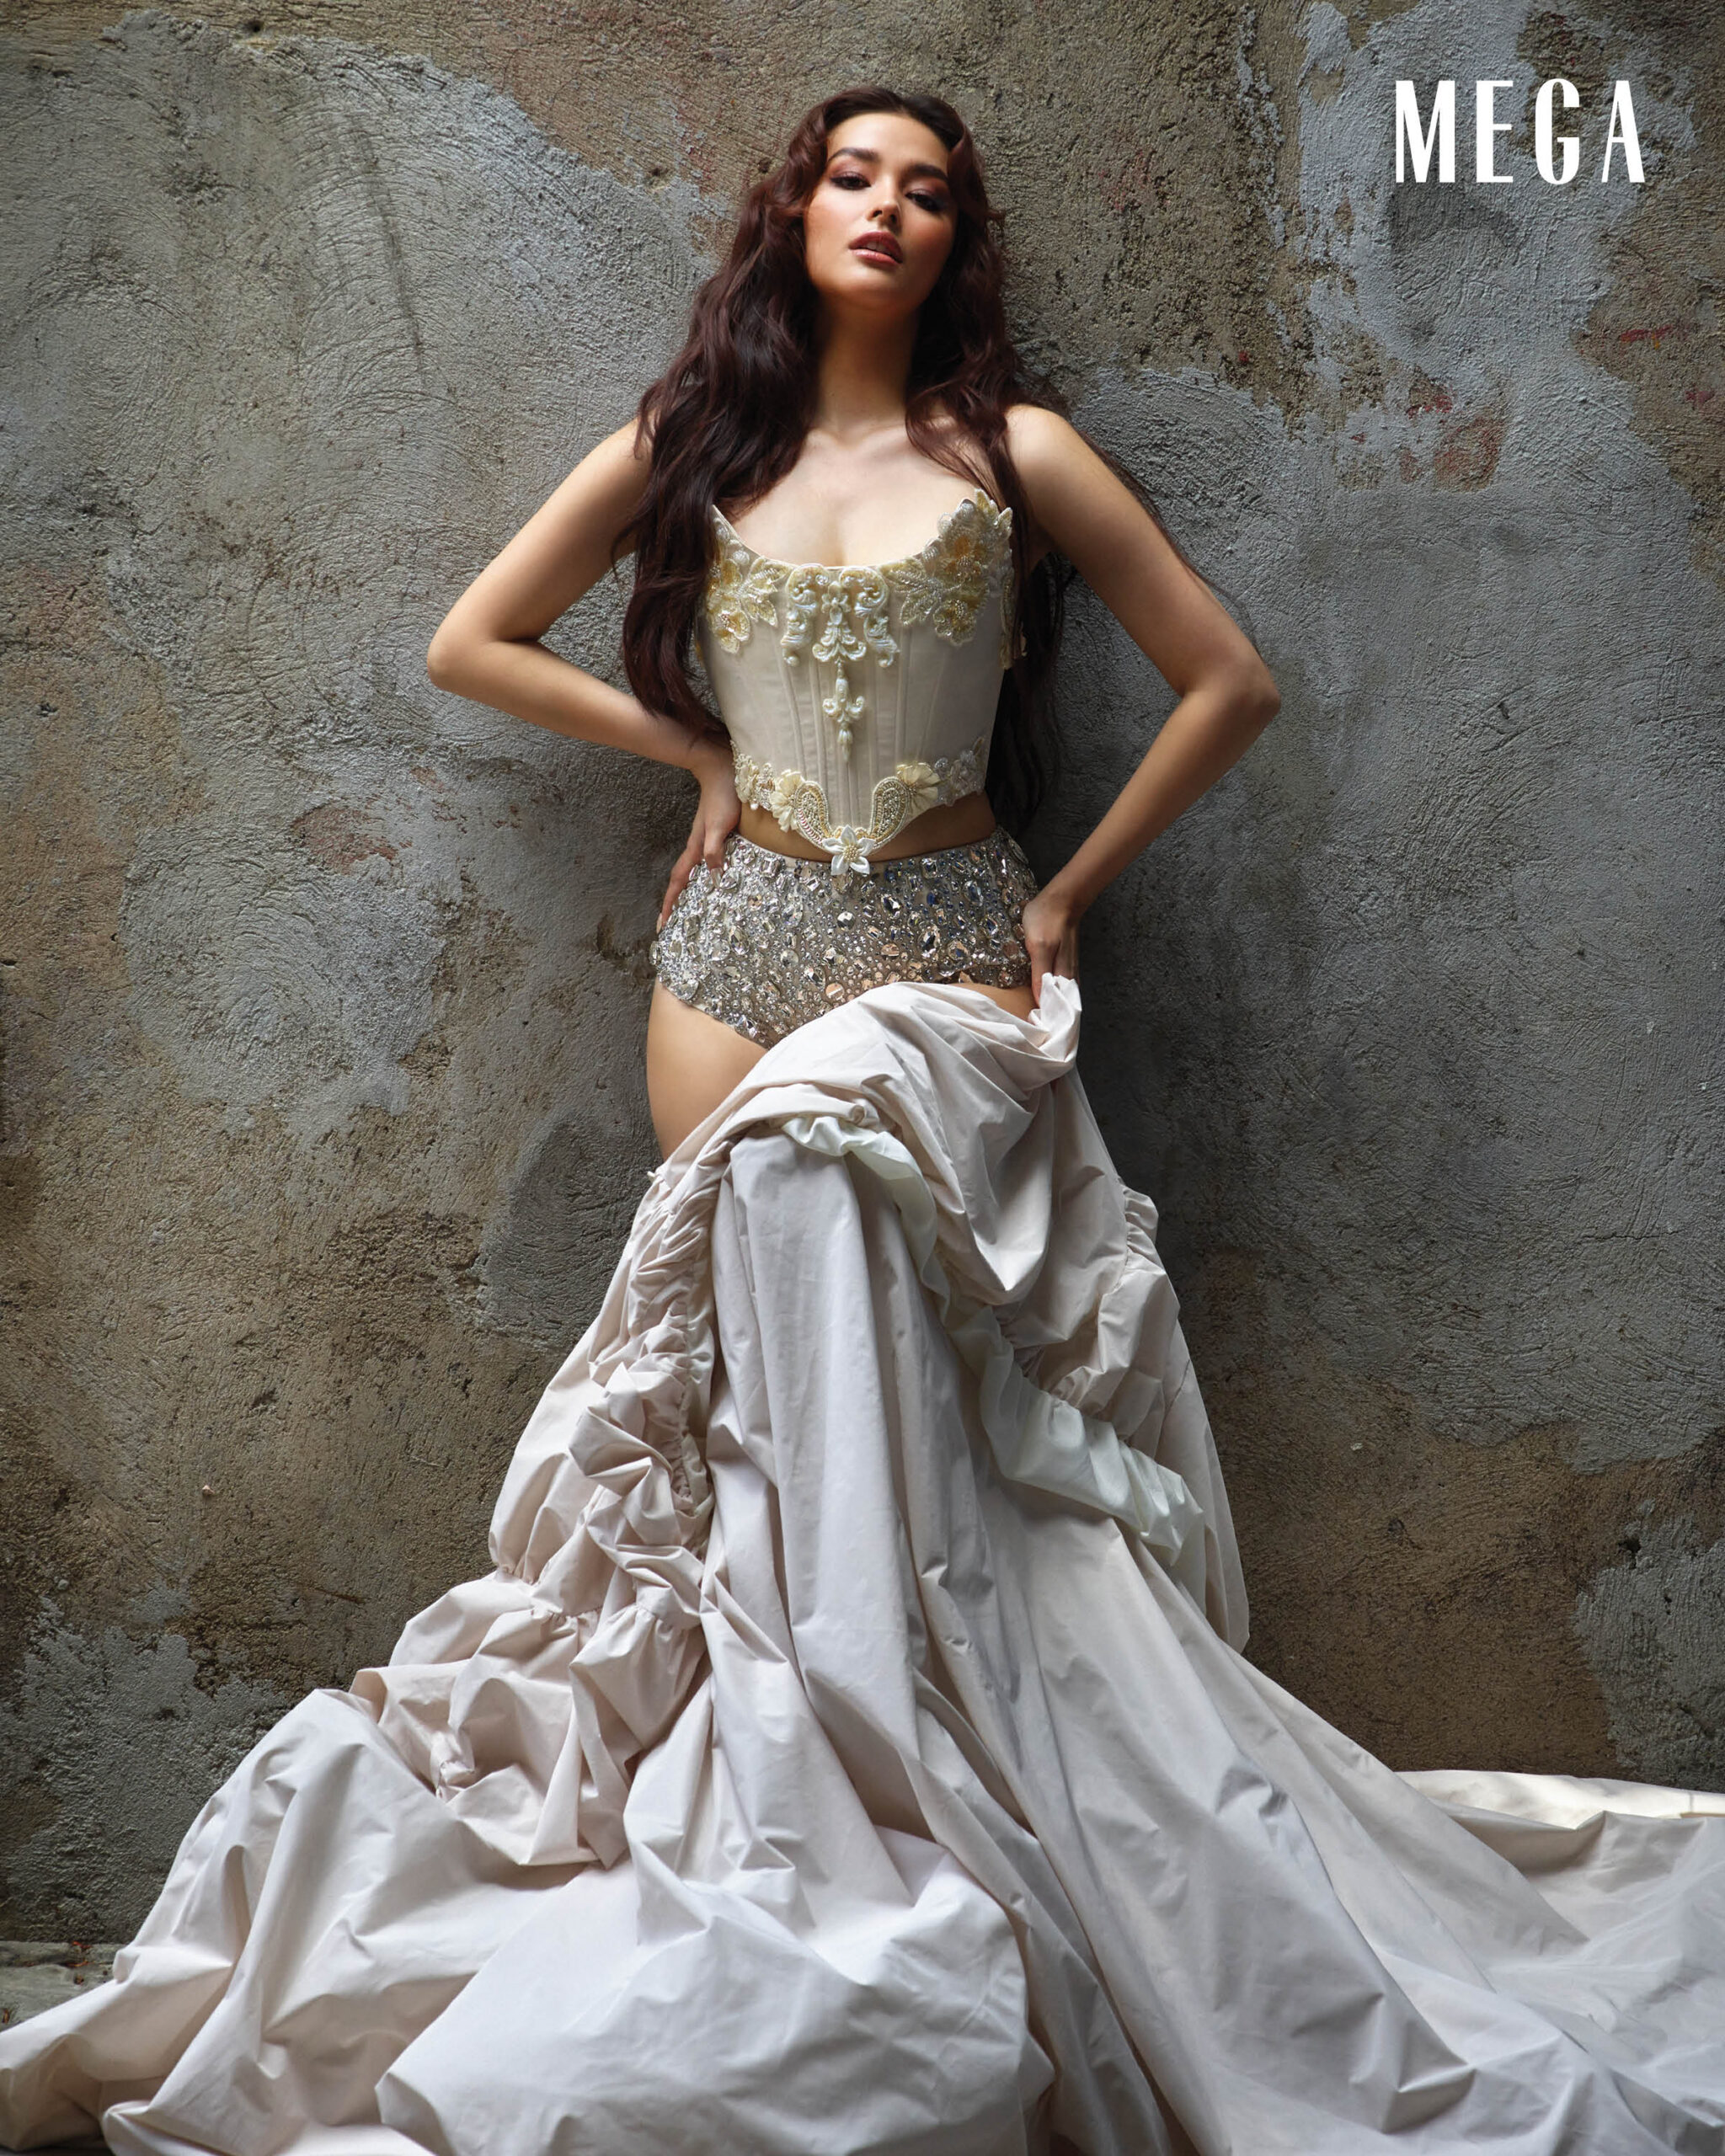 Liza Soberano in the Fantasy of Romantic Ethereal Dressing MEGA fairytale fiction theme dress